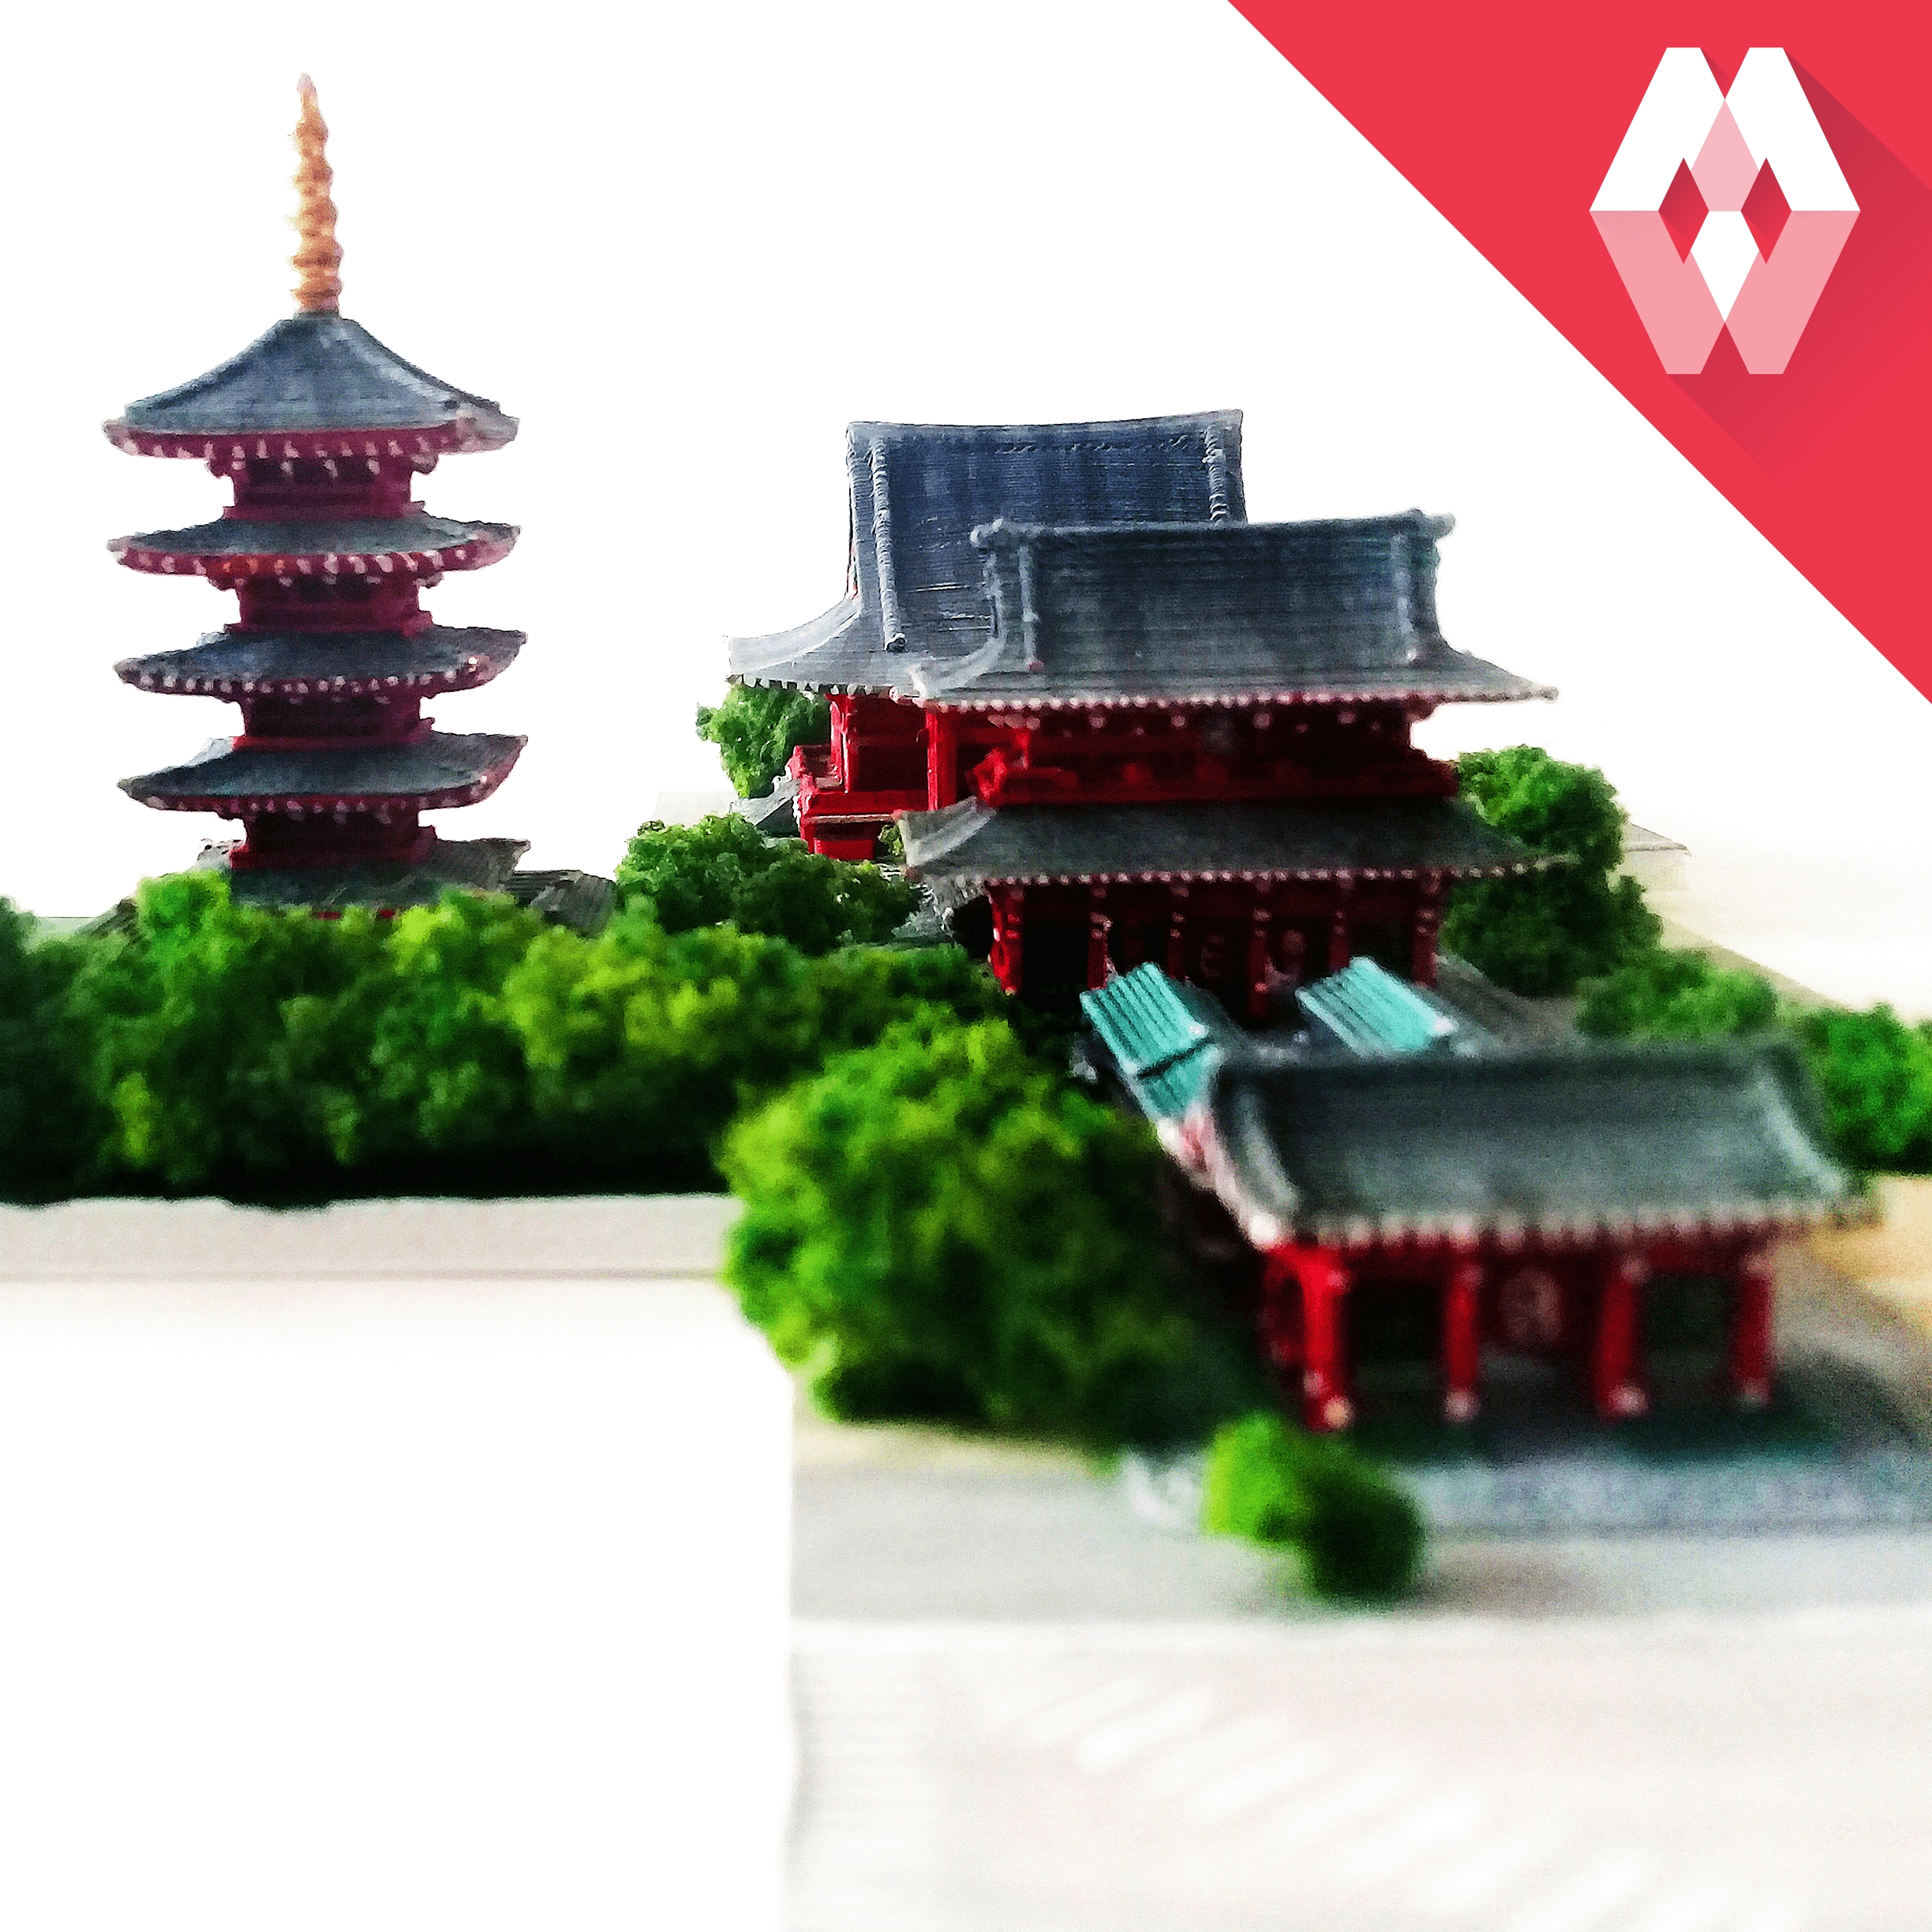 Asakusa Senso-ji Temple